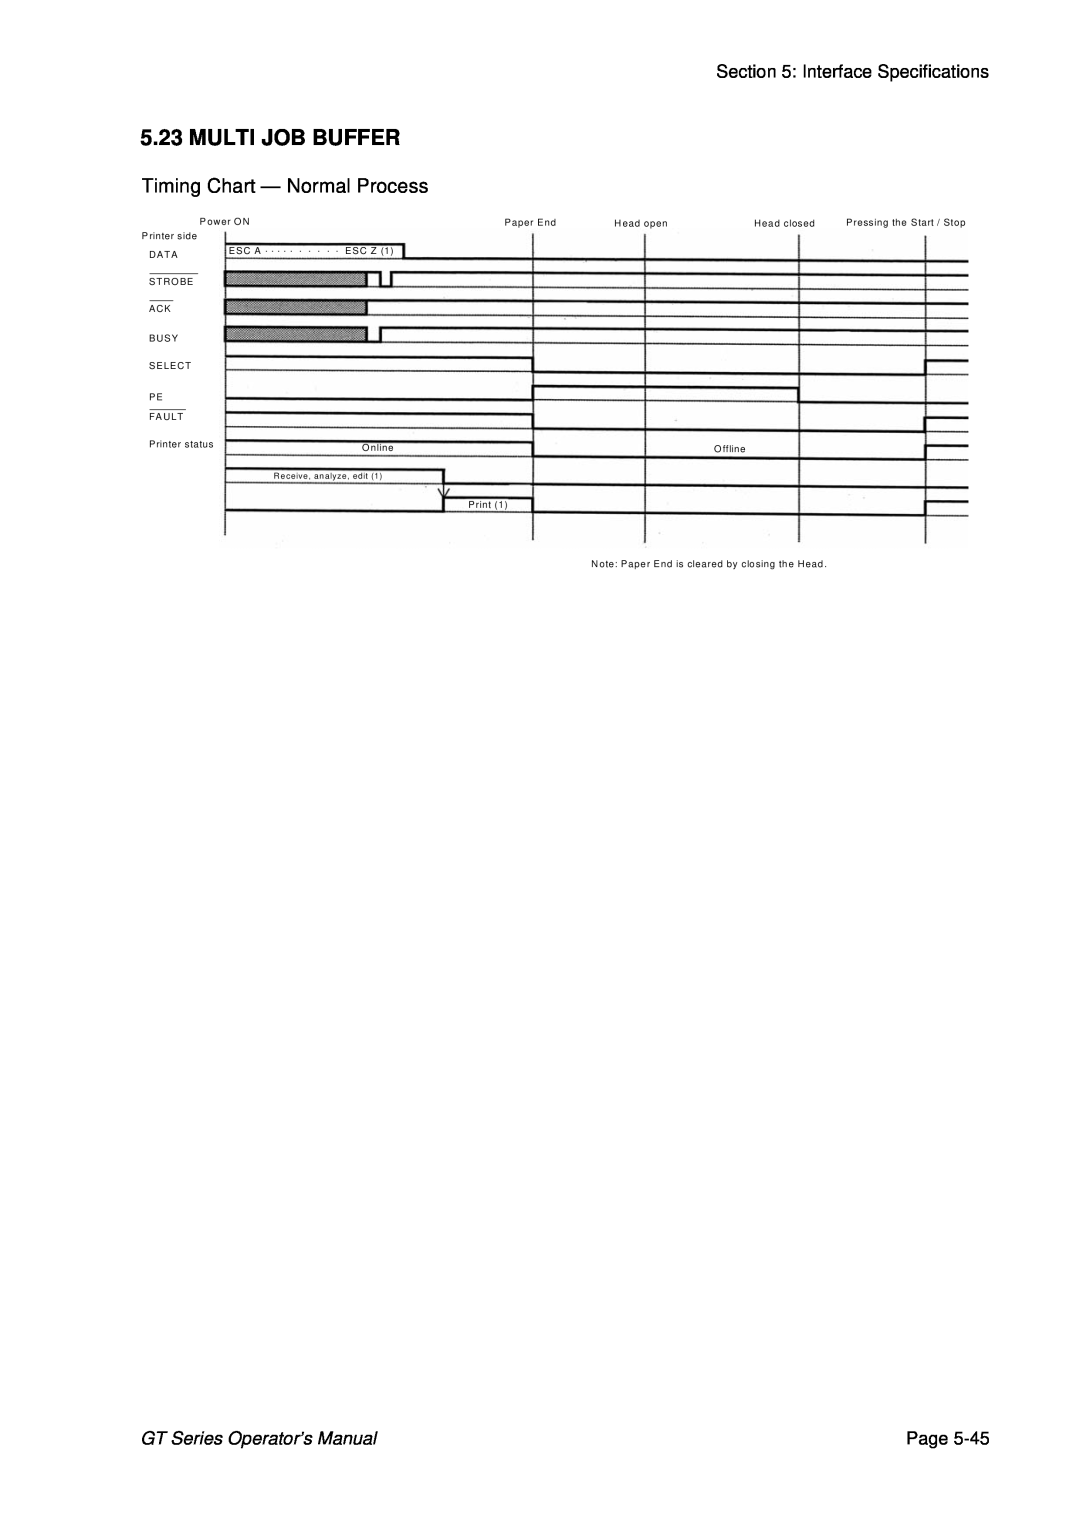 SATO GT424 manual Multi Job Buffer, Timing Chart - Normal Process, GT Series Operator’s Manual, Page 